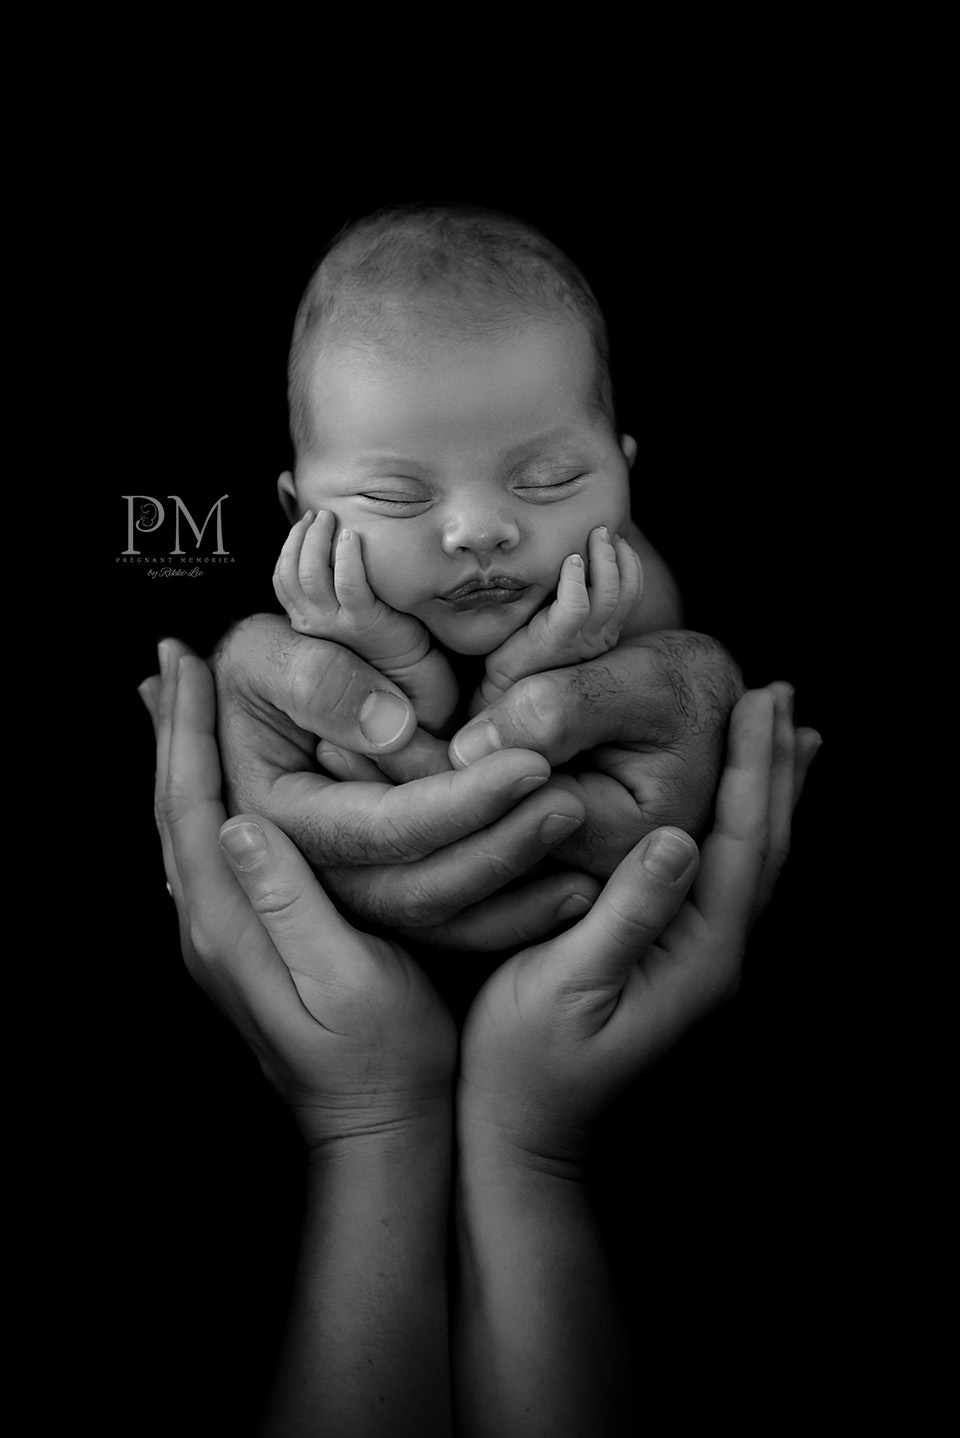 Beautiful newborn photography by Rikki-Lee.